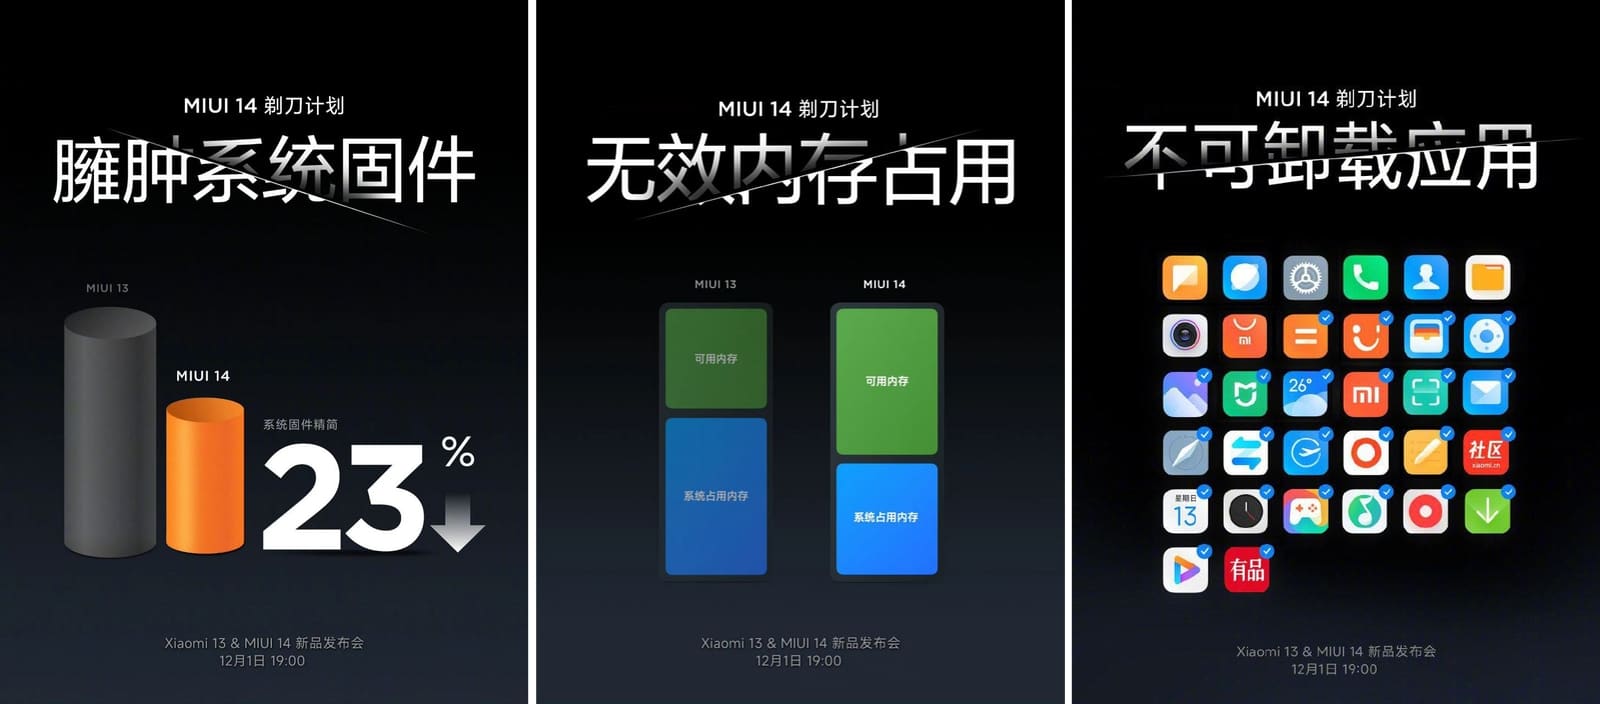 Xiaomi 14 аккумулятор. Супер иконки MIUI 14. MIUI 14 Global. Xiaomi MIUI 14. Xiaomi 13.